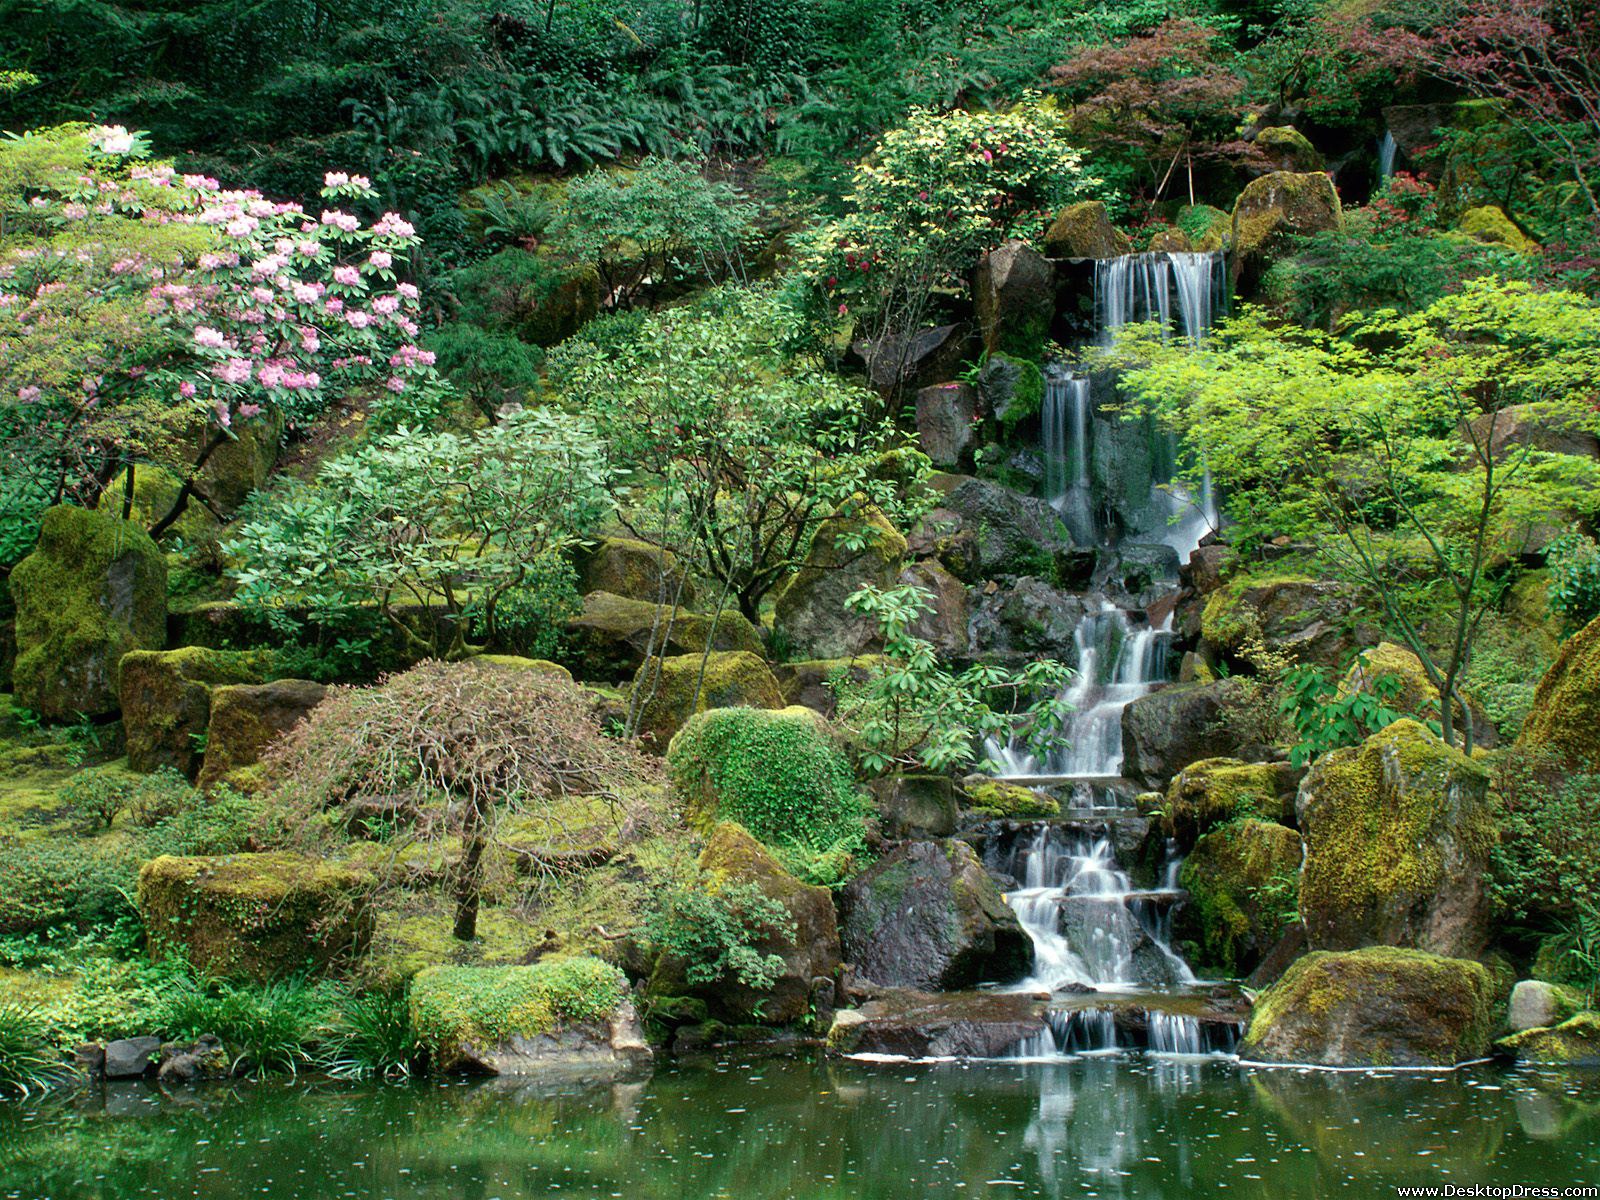  Backgrounds Japanese Gardens Portland Oregon wwwdesktopdress